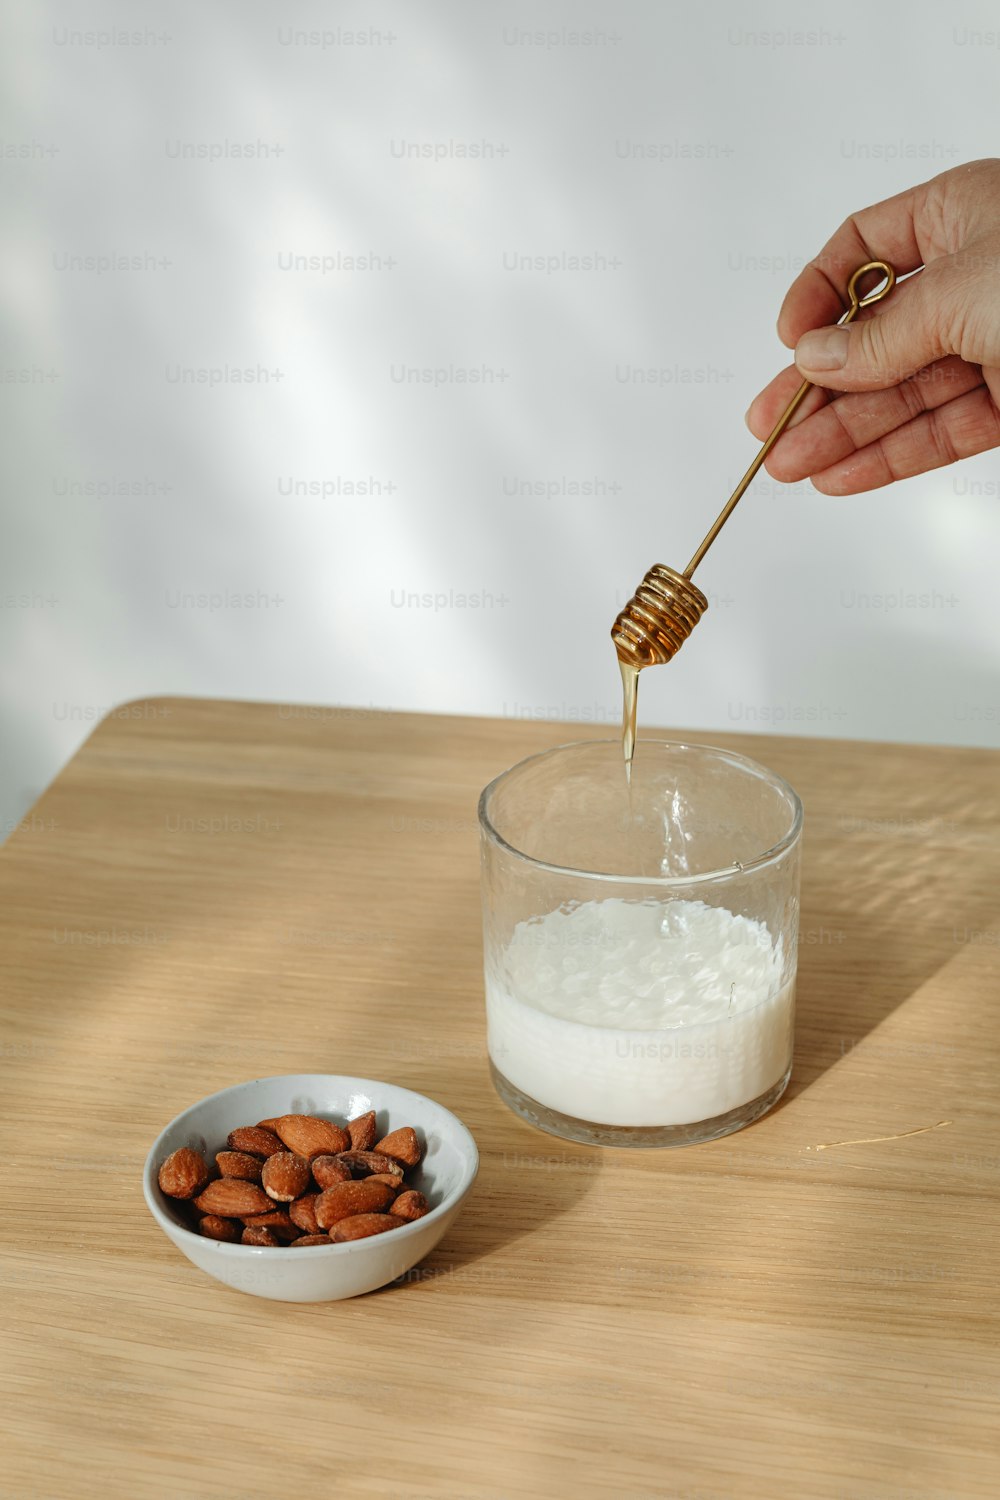 a person pouring sugar into a bowl of almonds